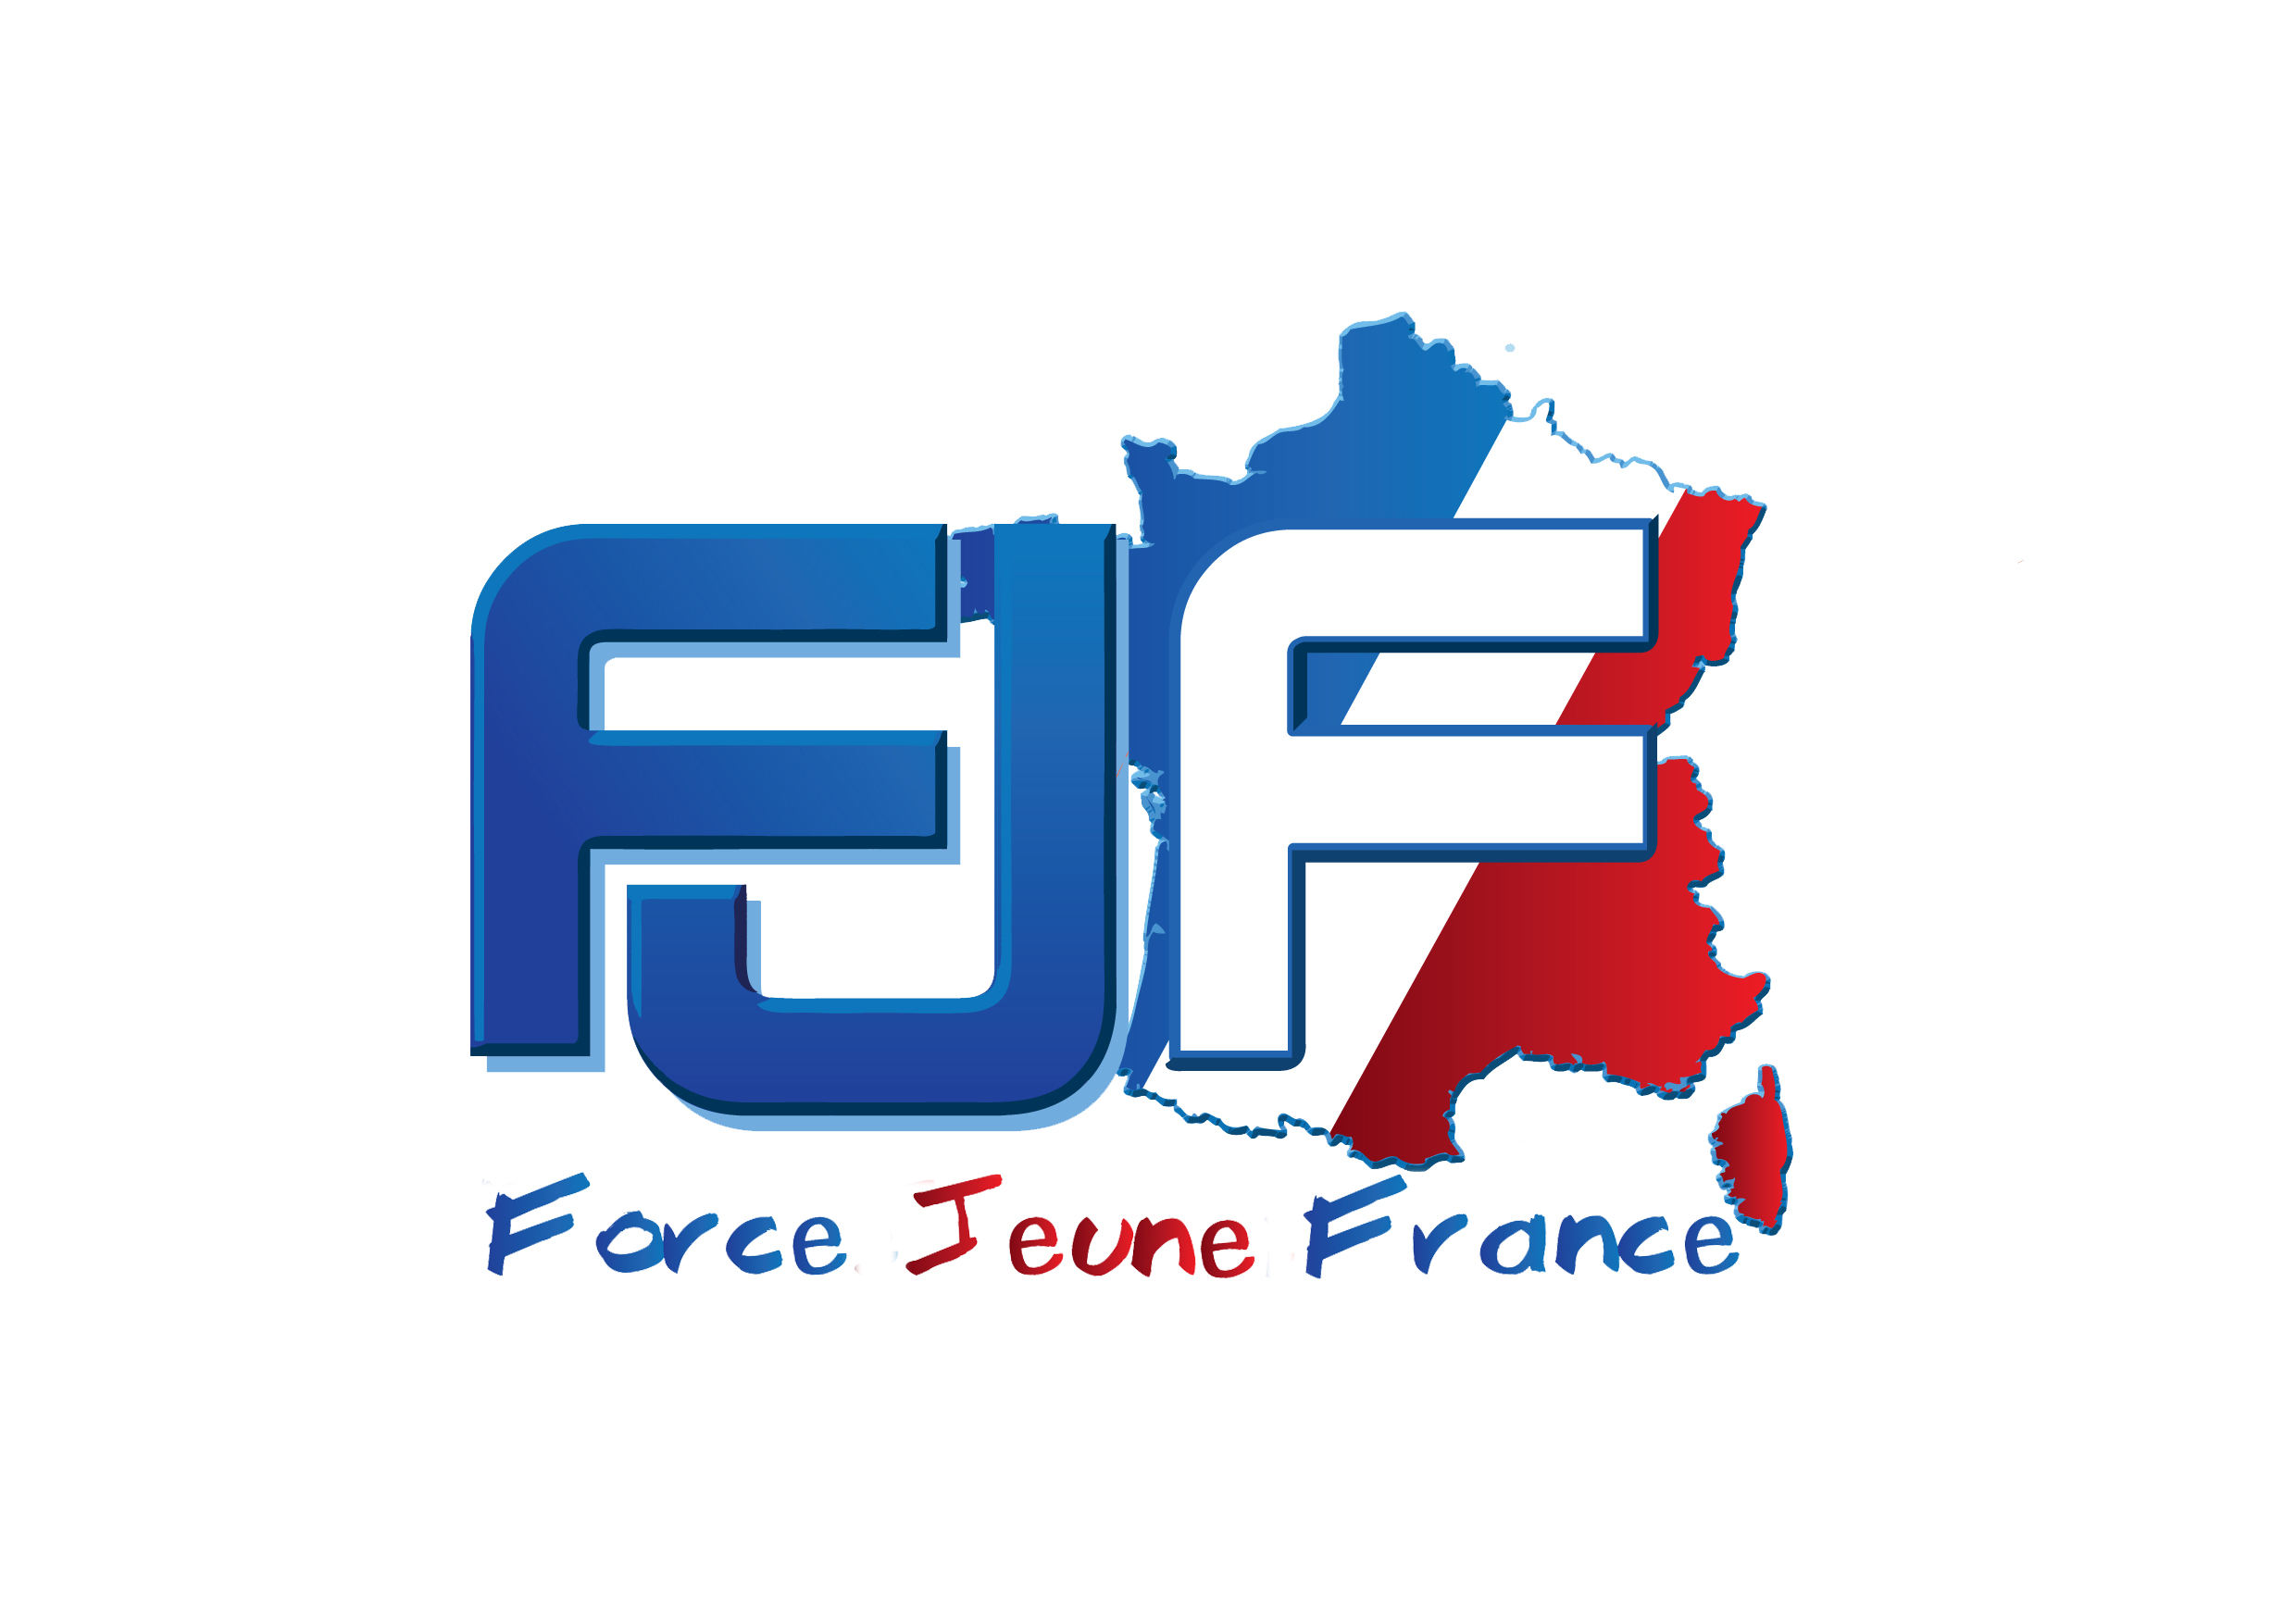 Force Jeune France